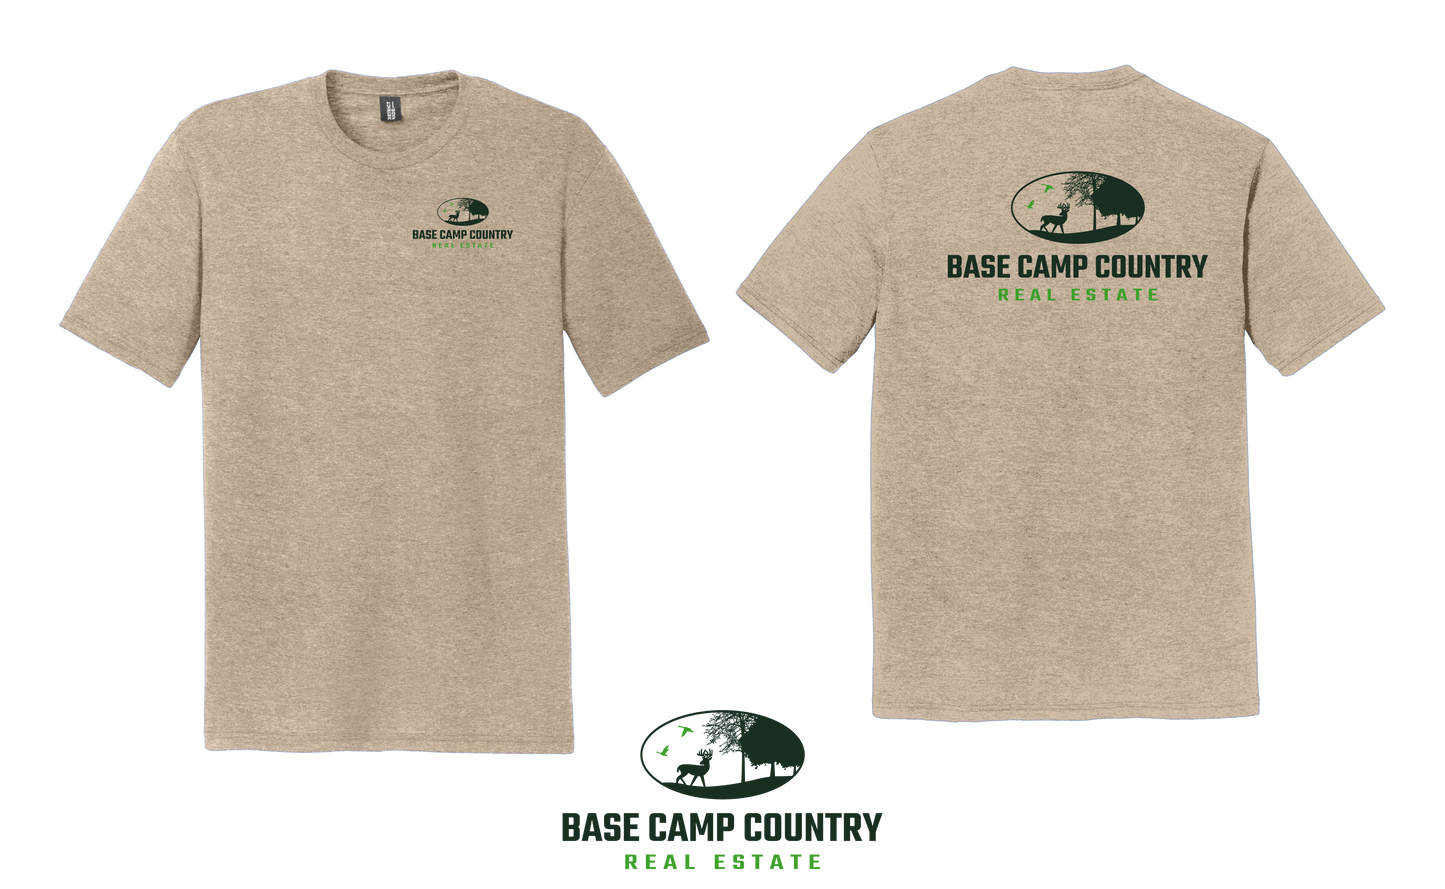 Base camp country logo shirt